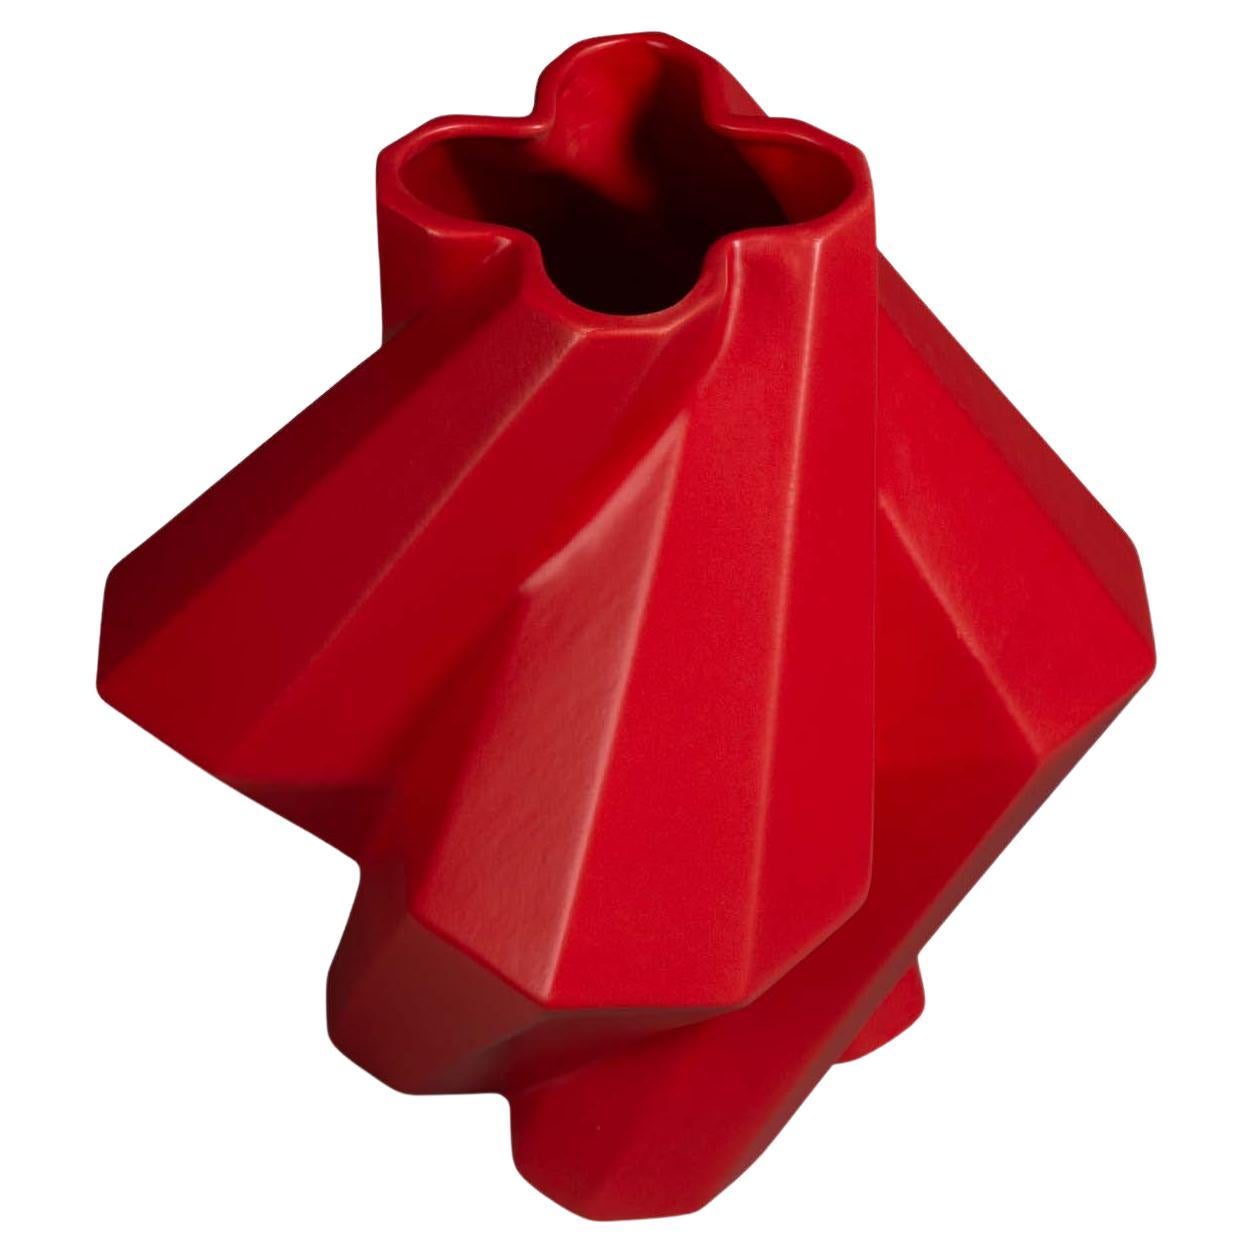 Lara Bohinc, Fortress Pillar Vase, Red Ceramic, Contemporary, Geometric, in Stoc